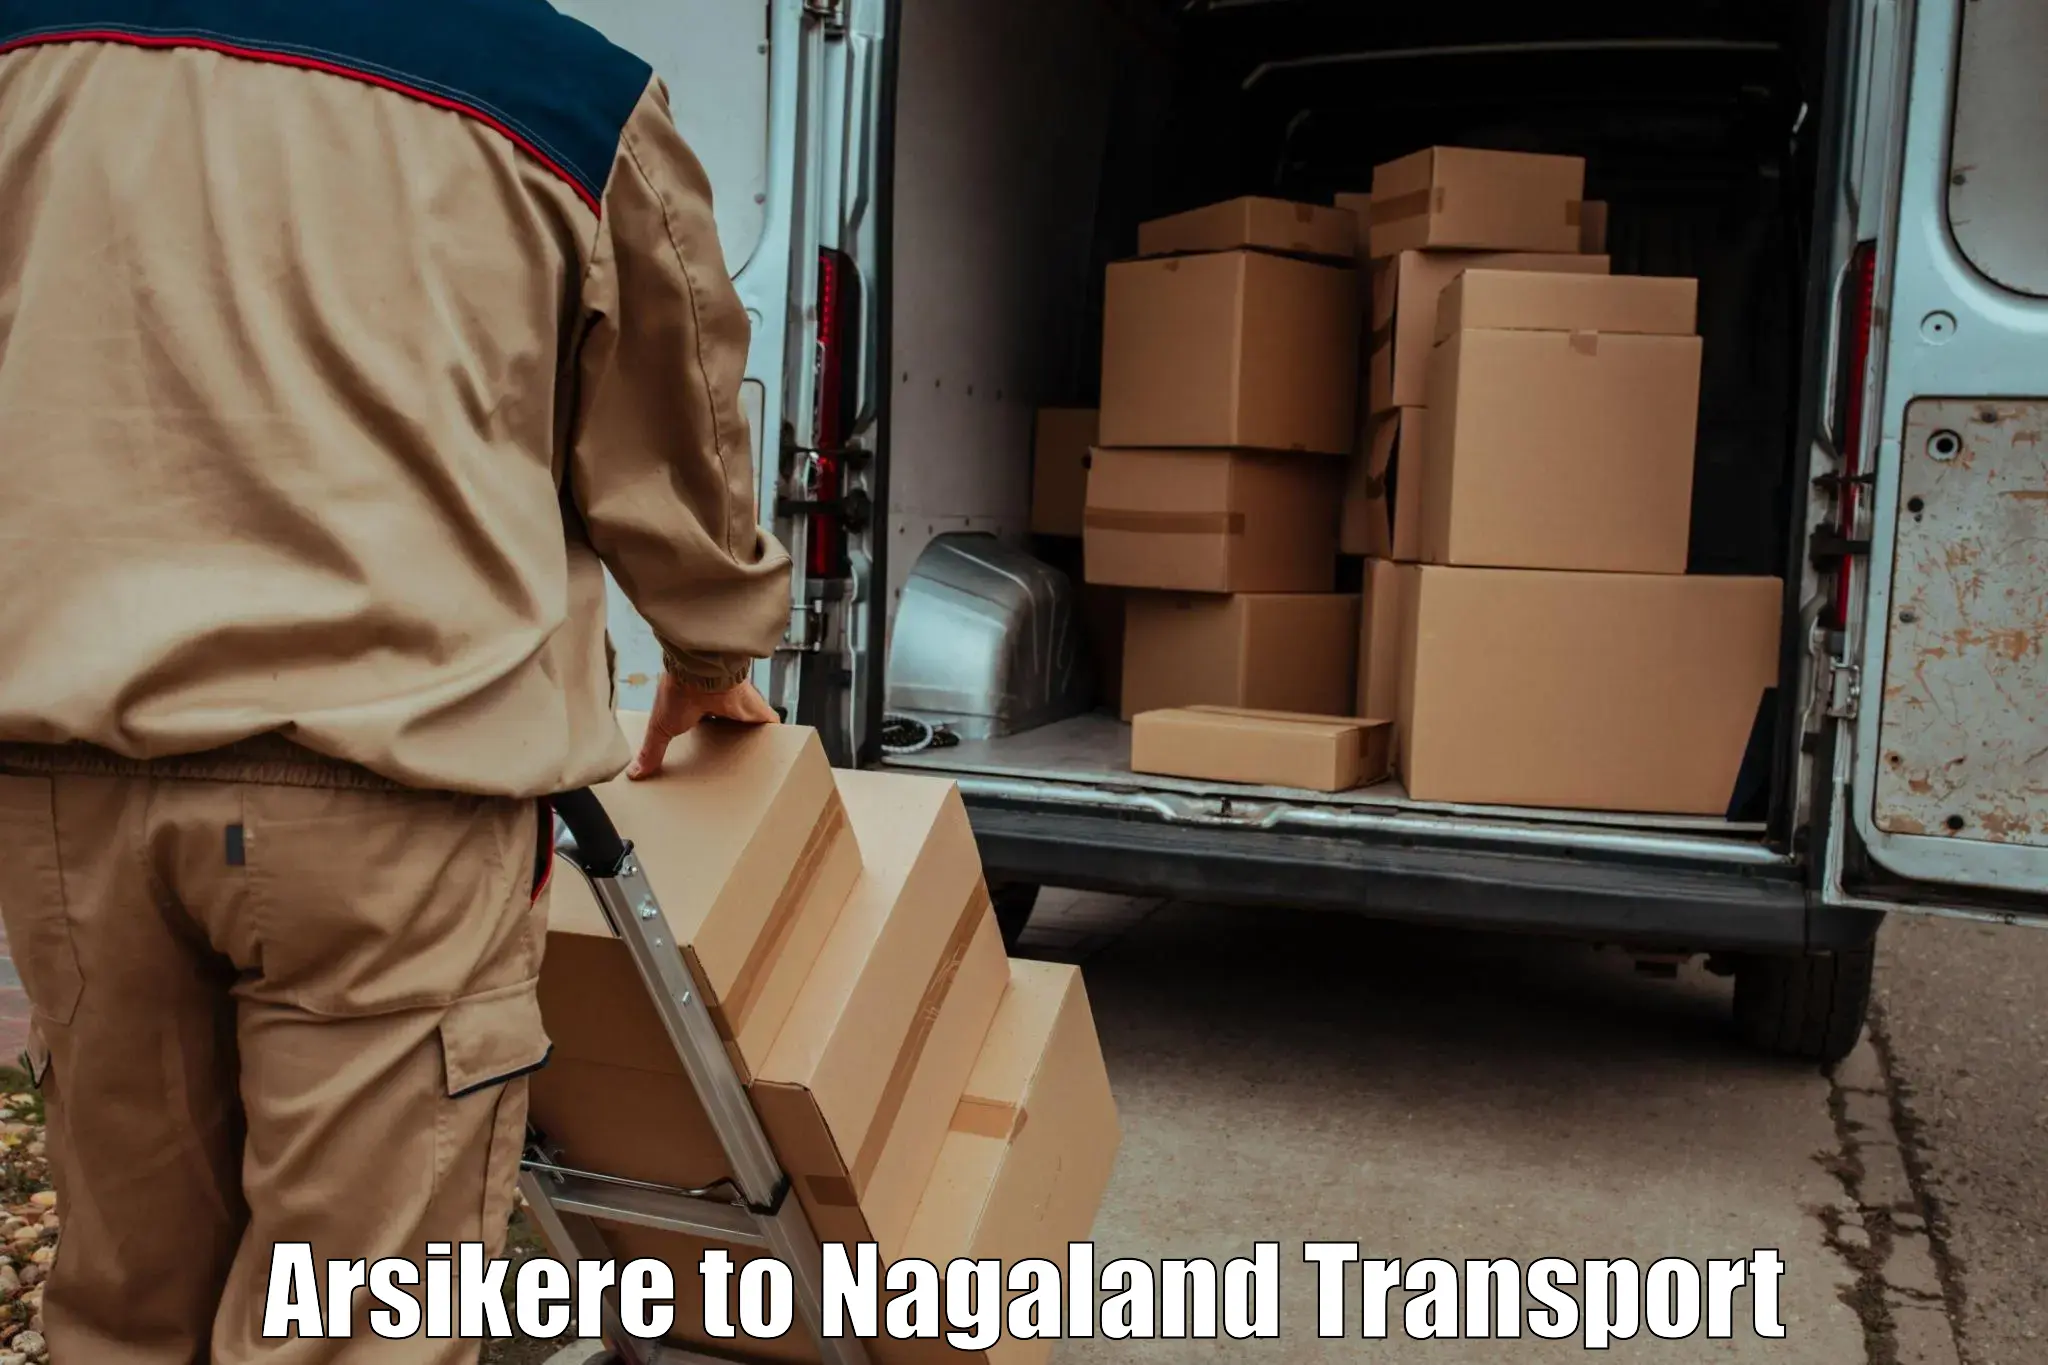 Shipping partner Arsikere to Nagaland